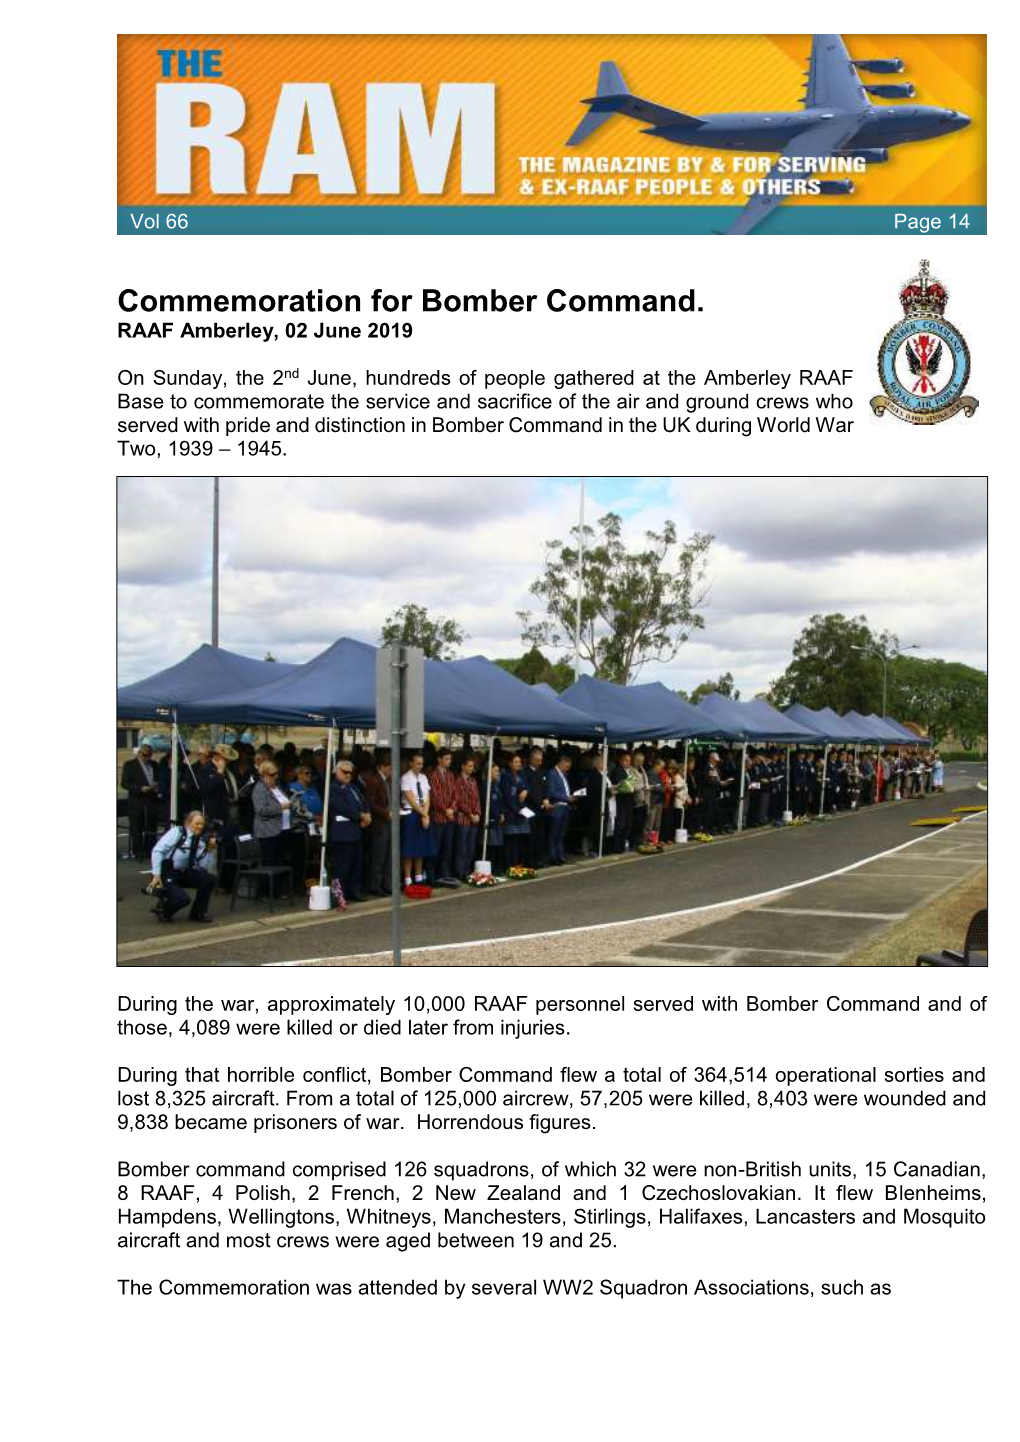 Commemoration for Bomber Command. RAAF Amberley, 02 June 2019